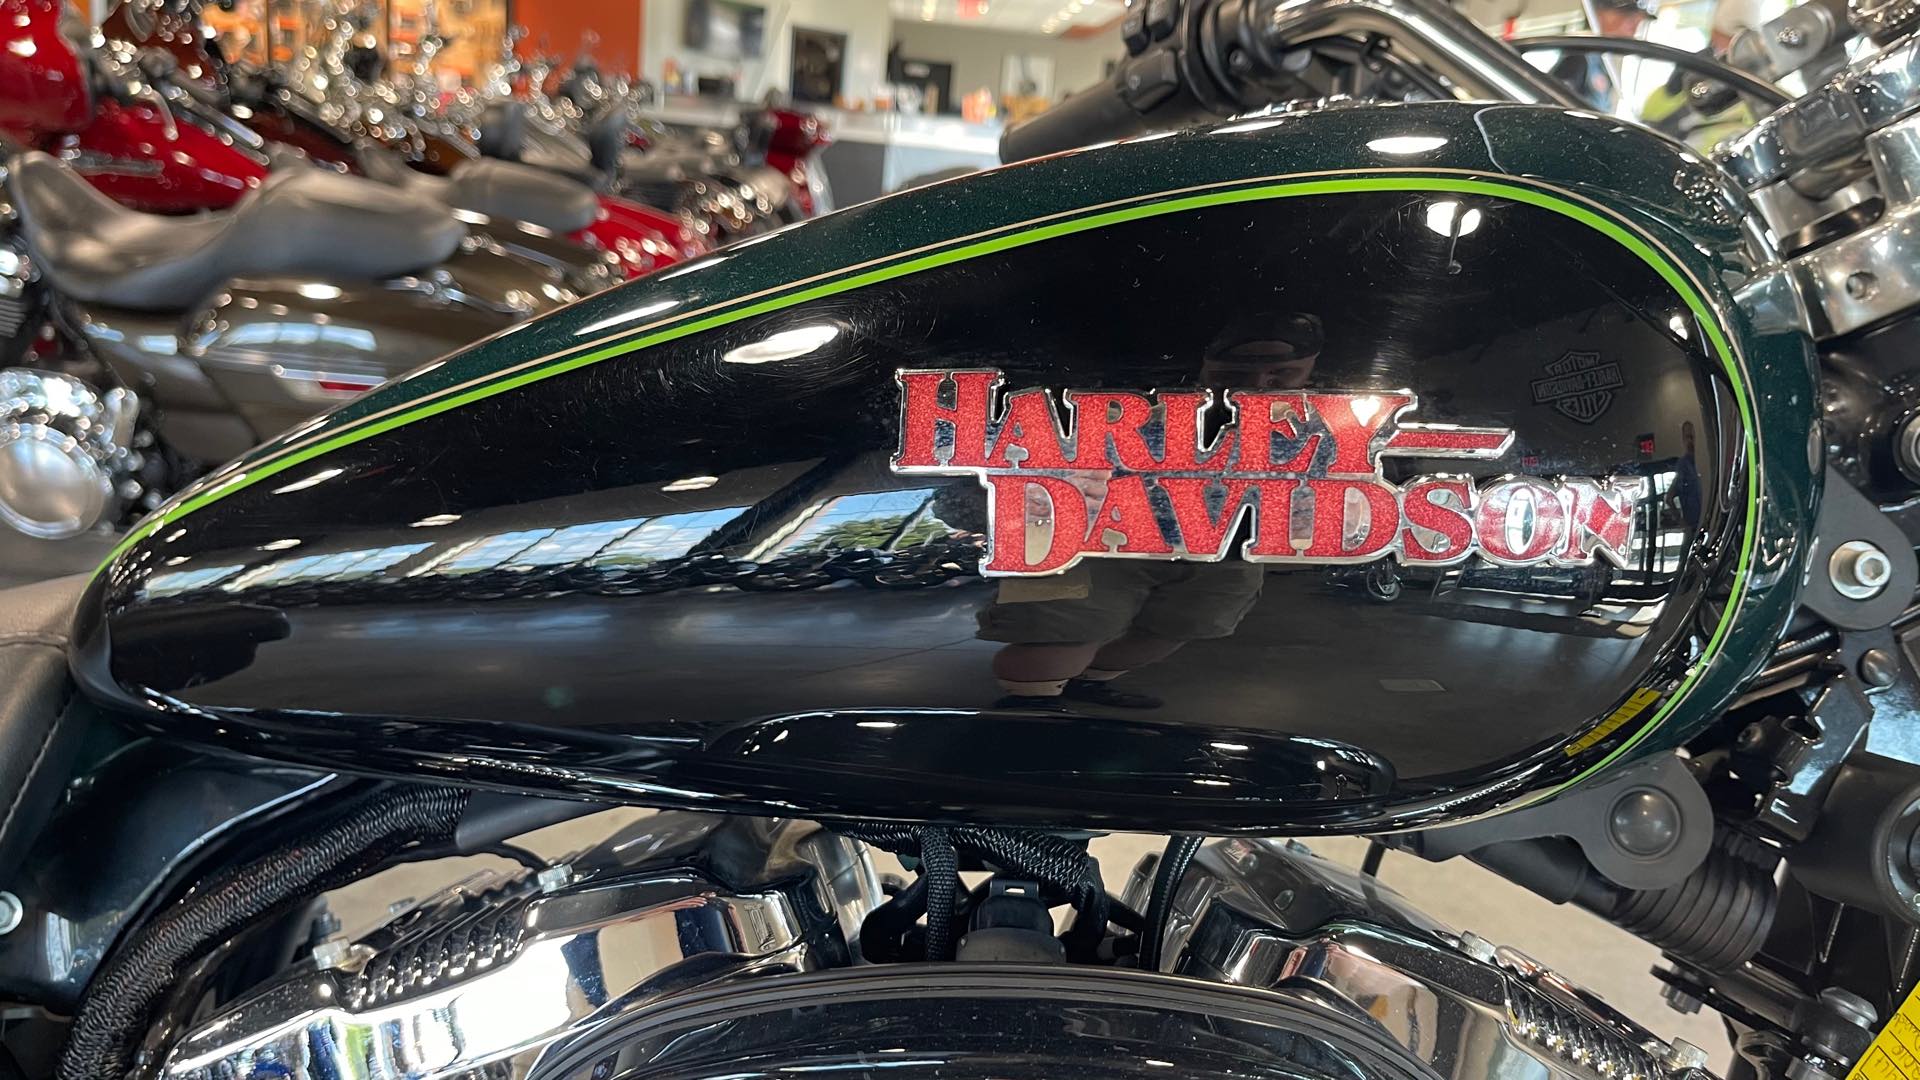 2016 Harley-Davidson Sportster SuperLow 1200T at Keystone Harley-Davidson